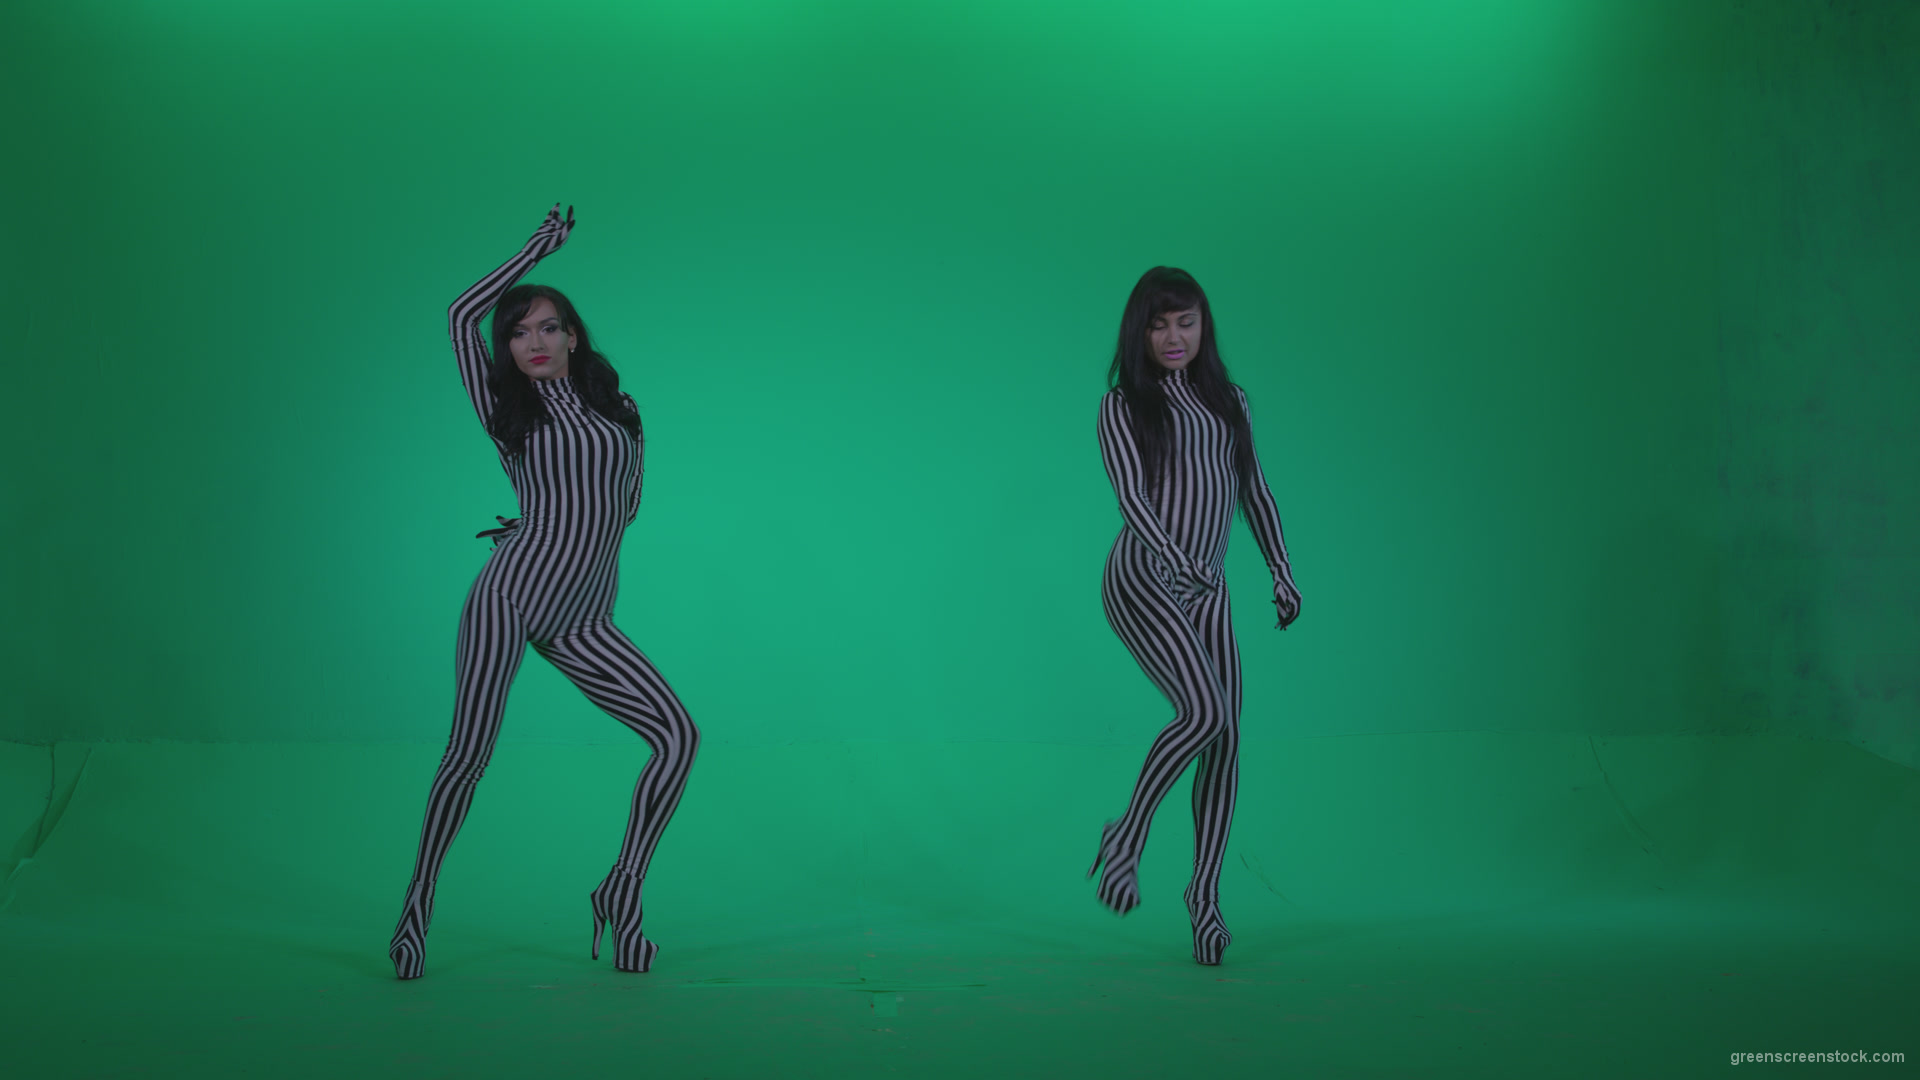 Go-go-Dancer-White-Stripes-s1-Green-Screen-Video-Footage_001 Green Screen Stock